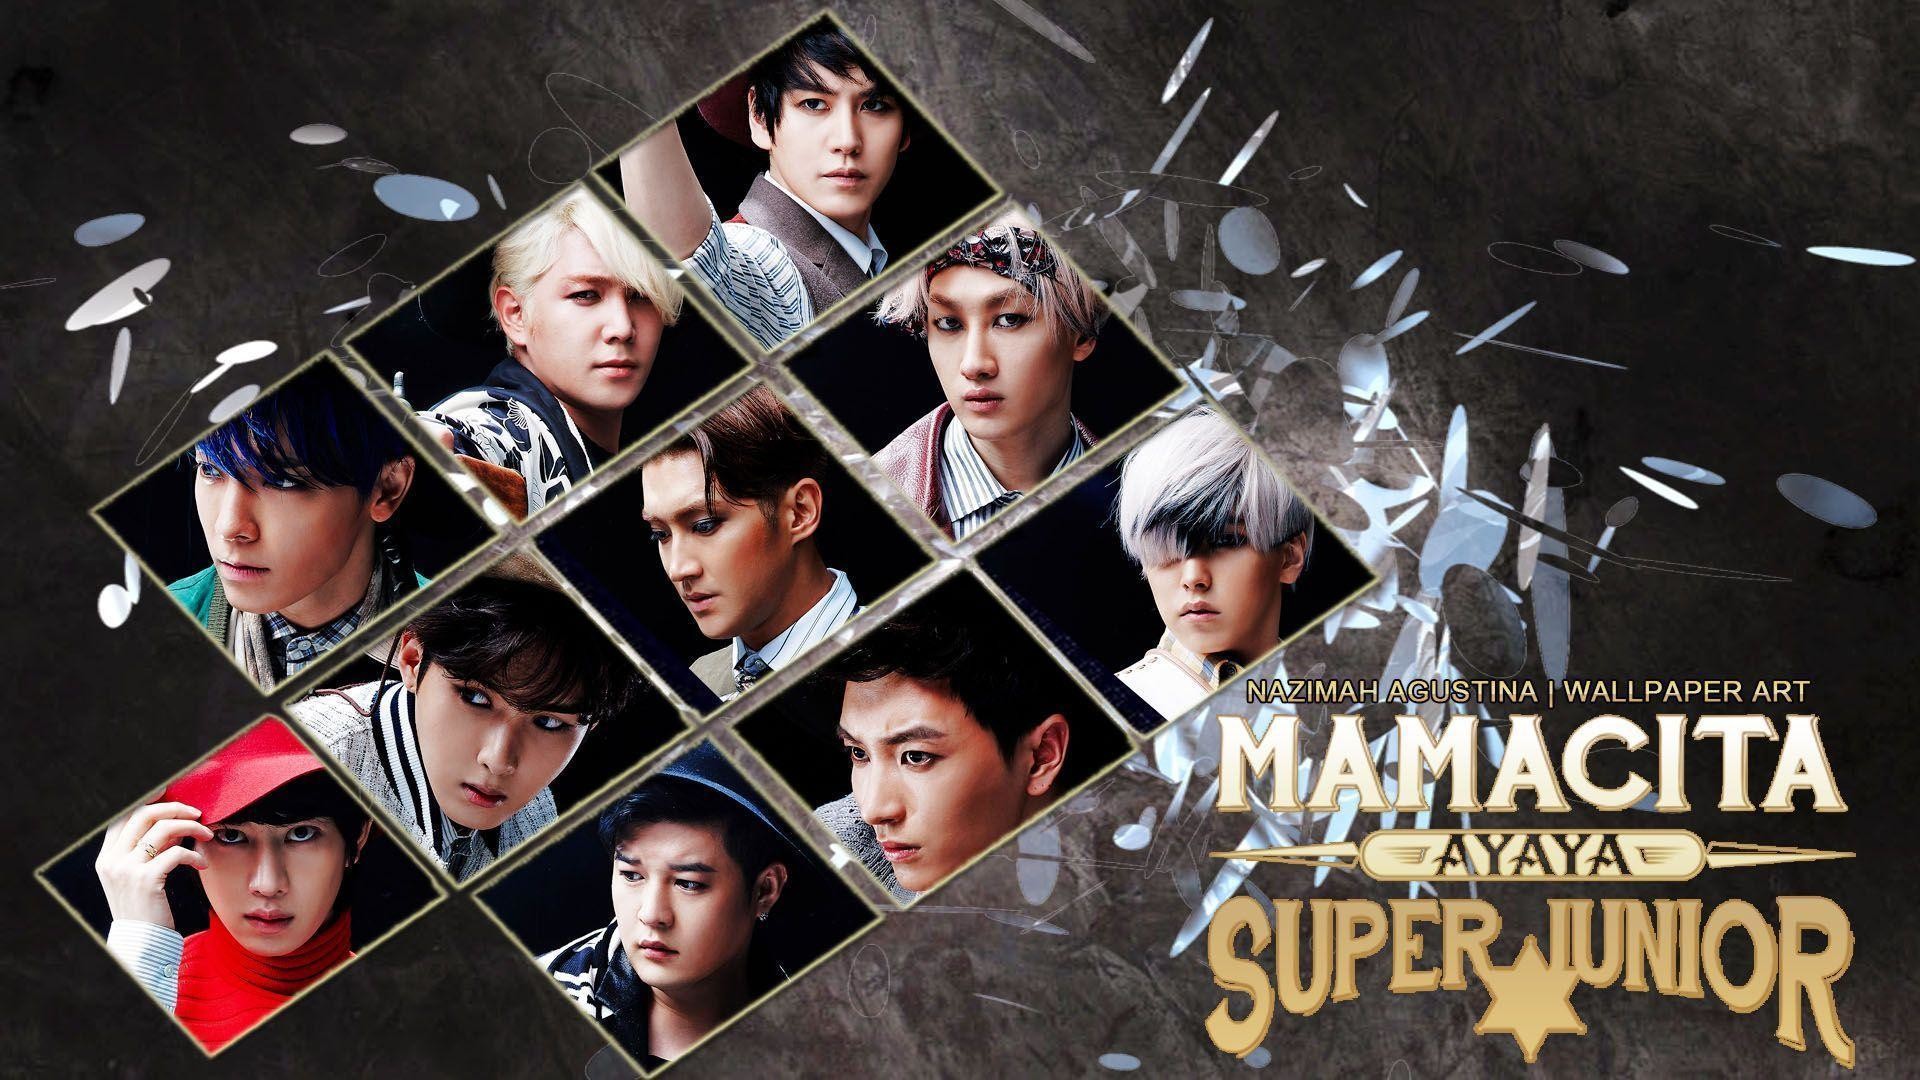 Wallpapers] Happy 9th Anniversary Super Junior - Super Junior Wallpaper 2018 - HD Wallpaper 